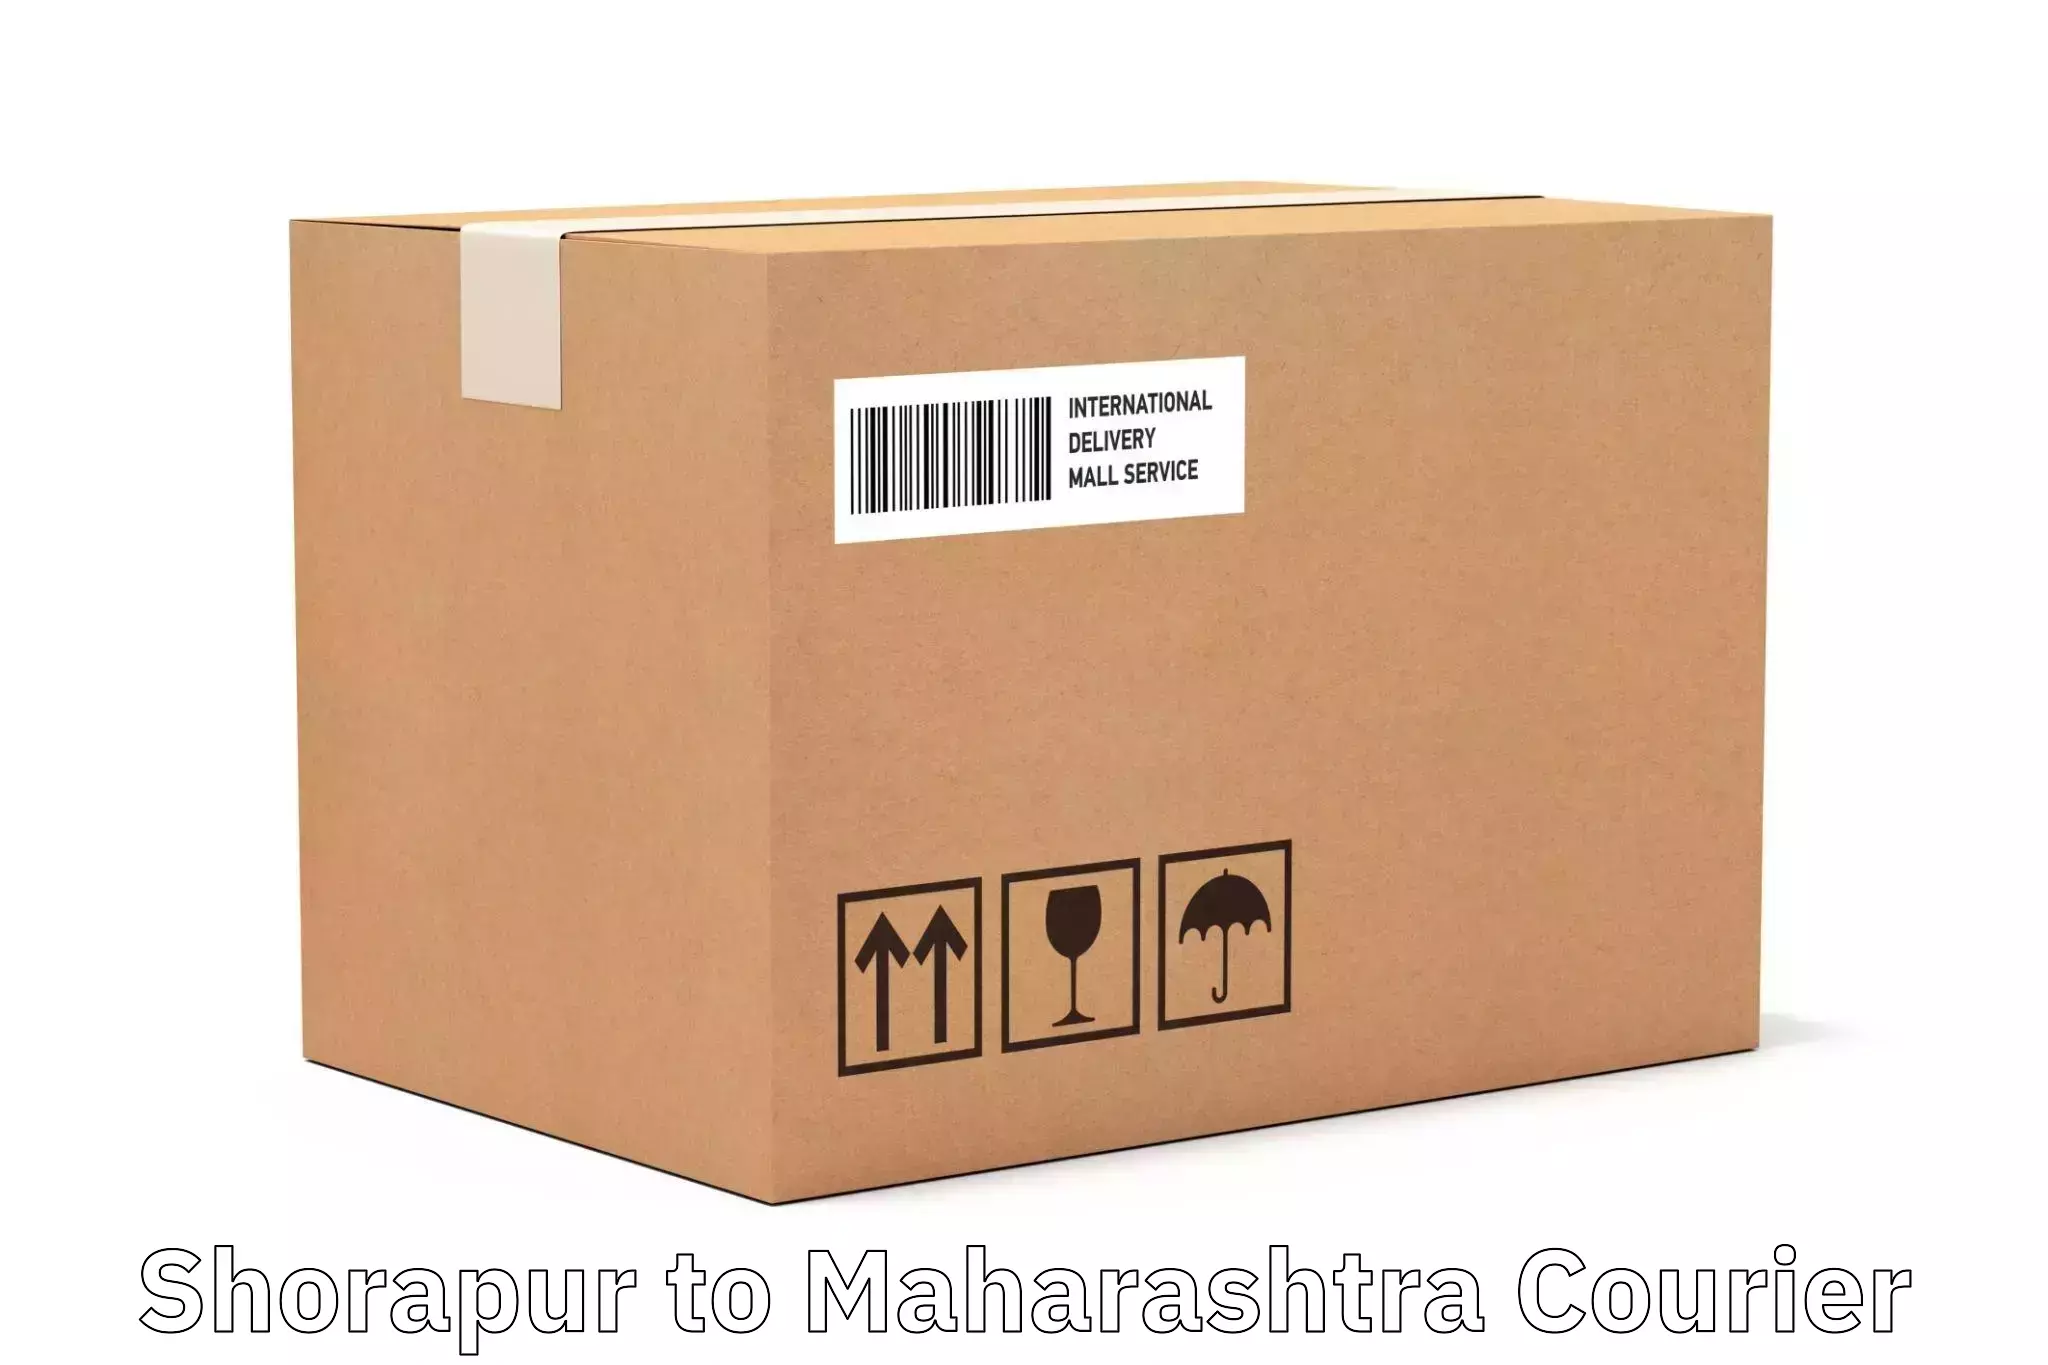 Express delivery capabilities Shorapur to Shahada